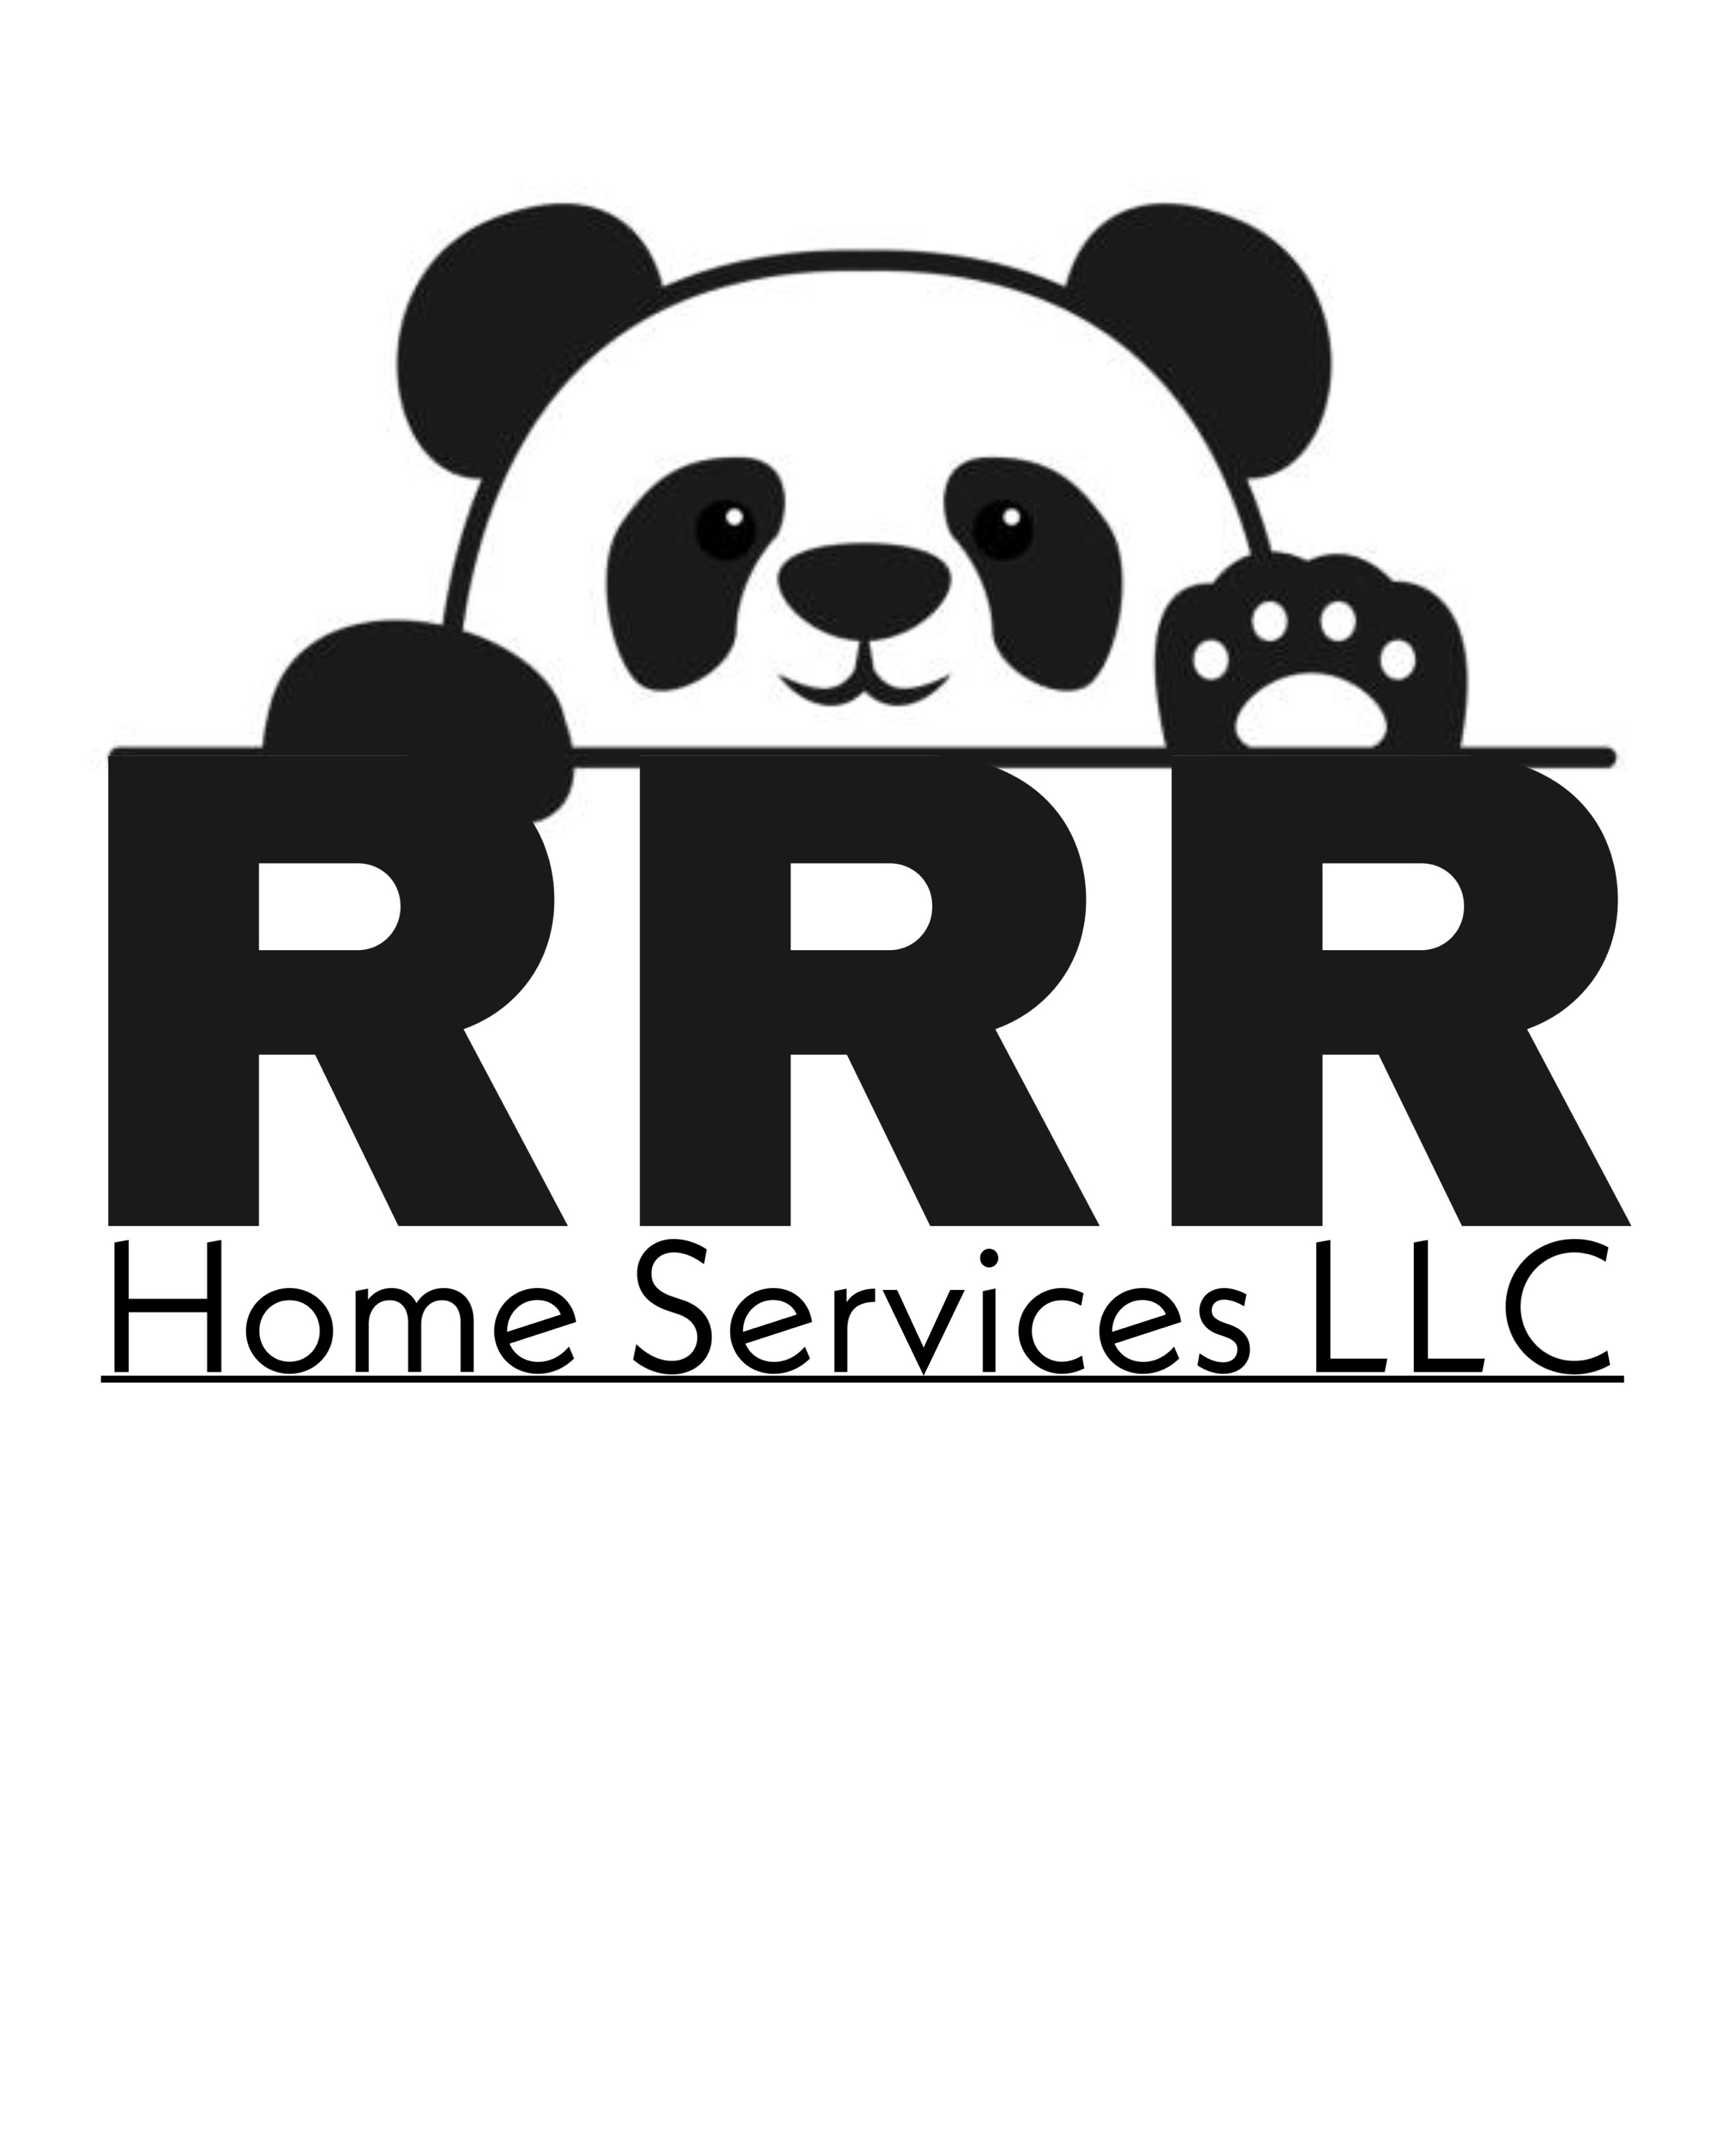 RRR HOME SERVICES LLC Logo